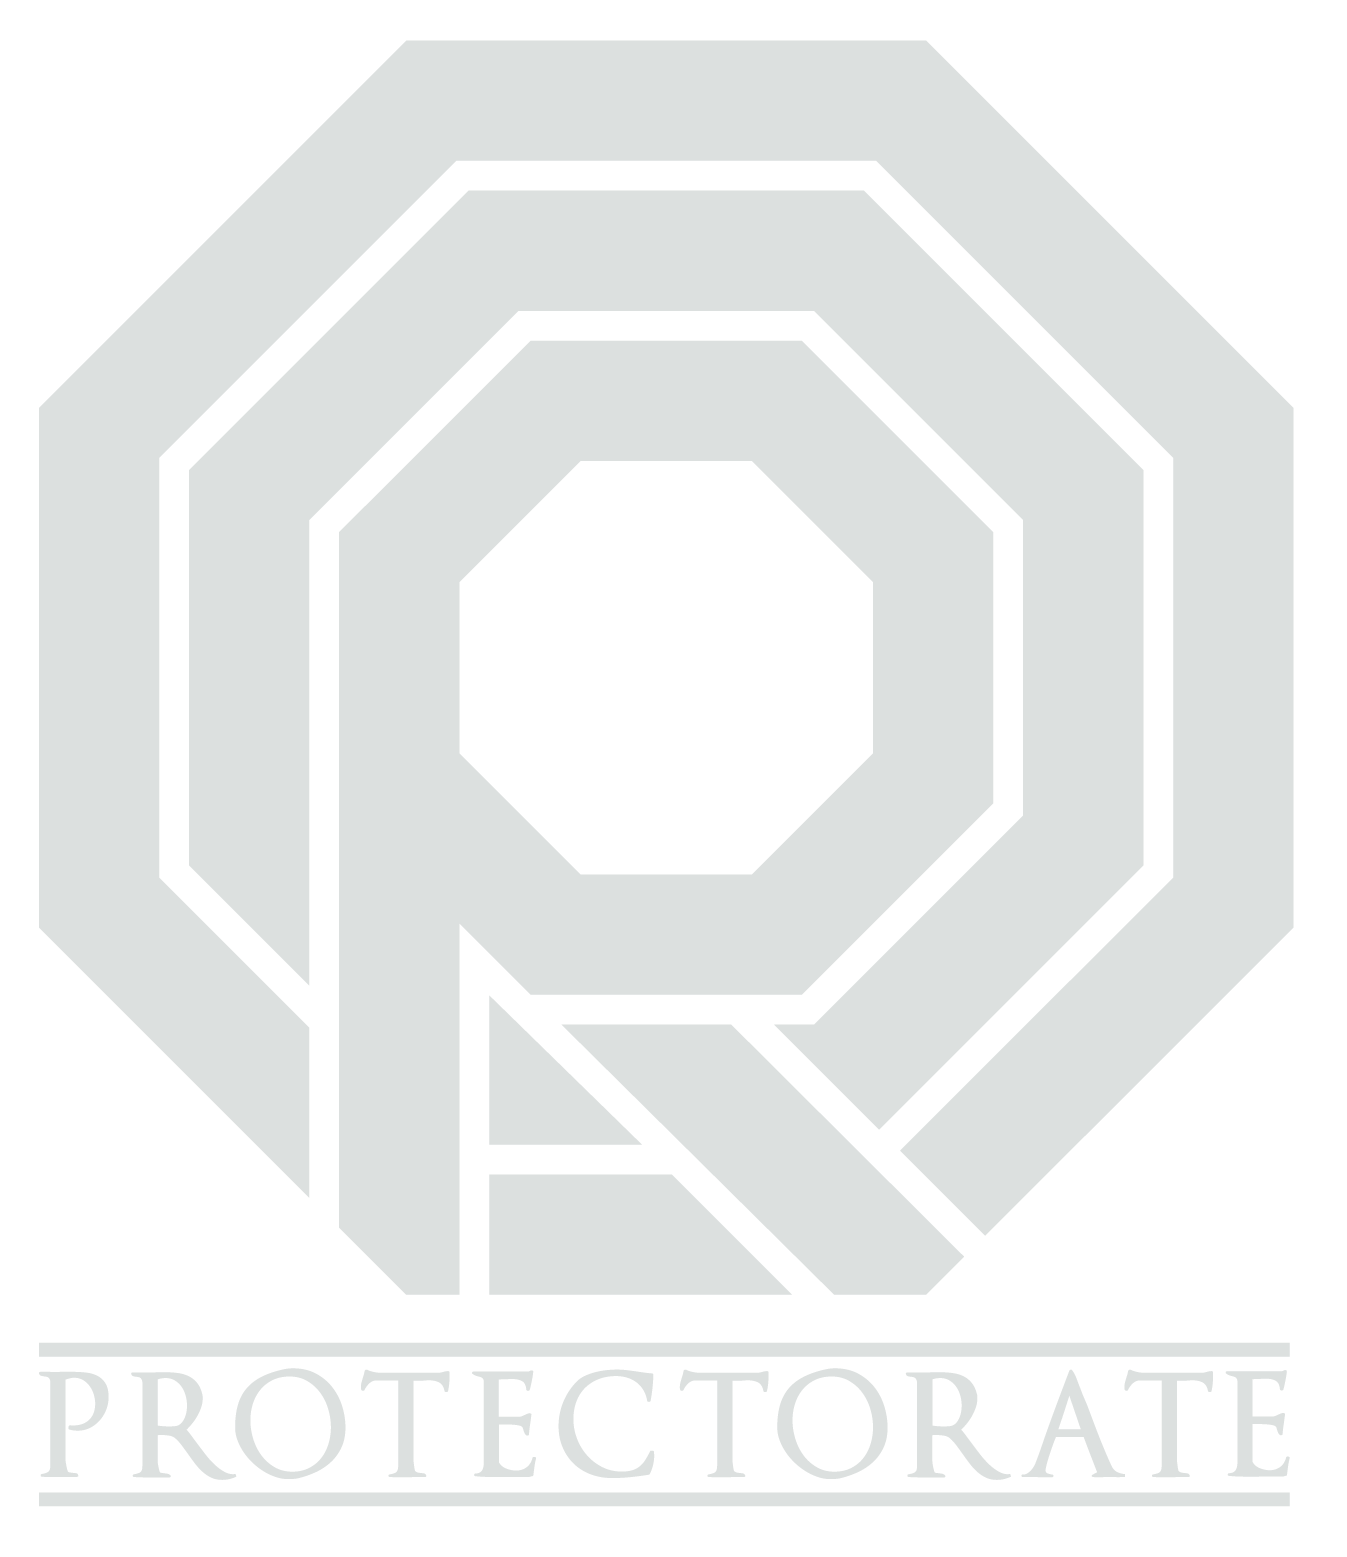 Protectorate logo